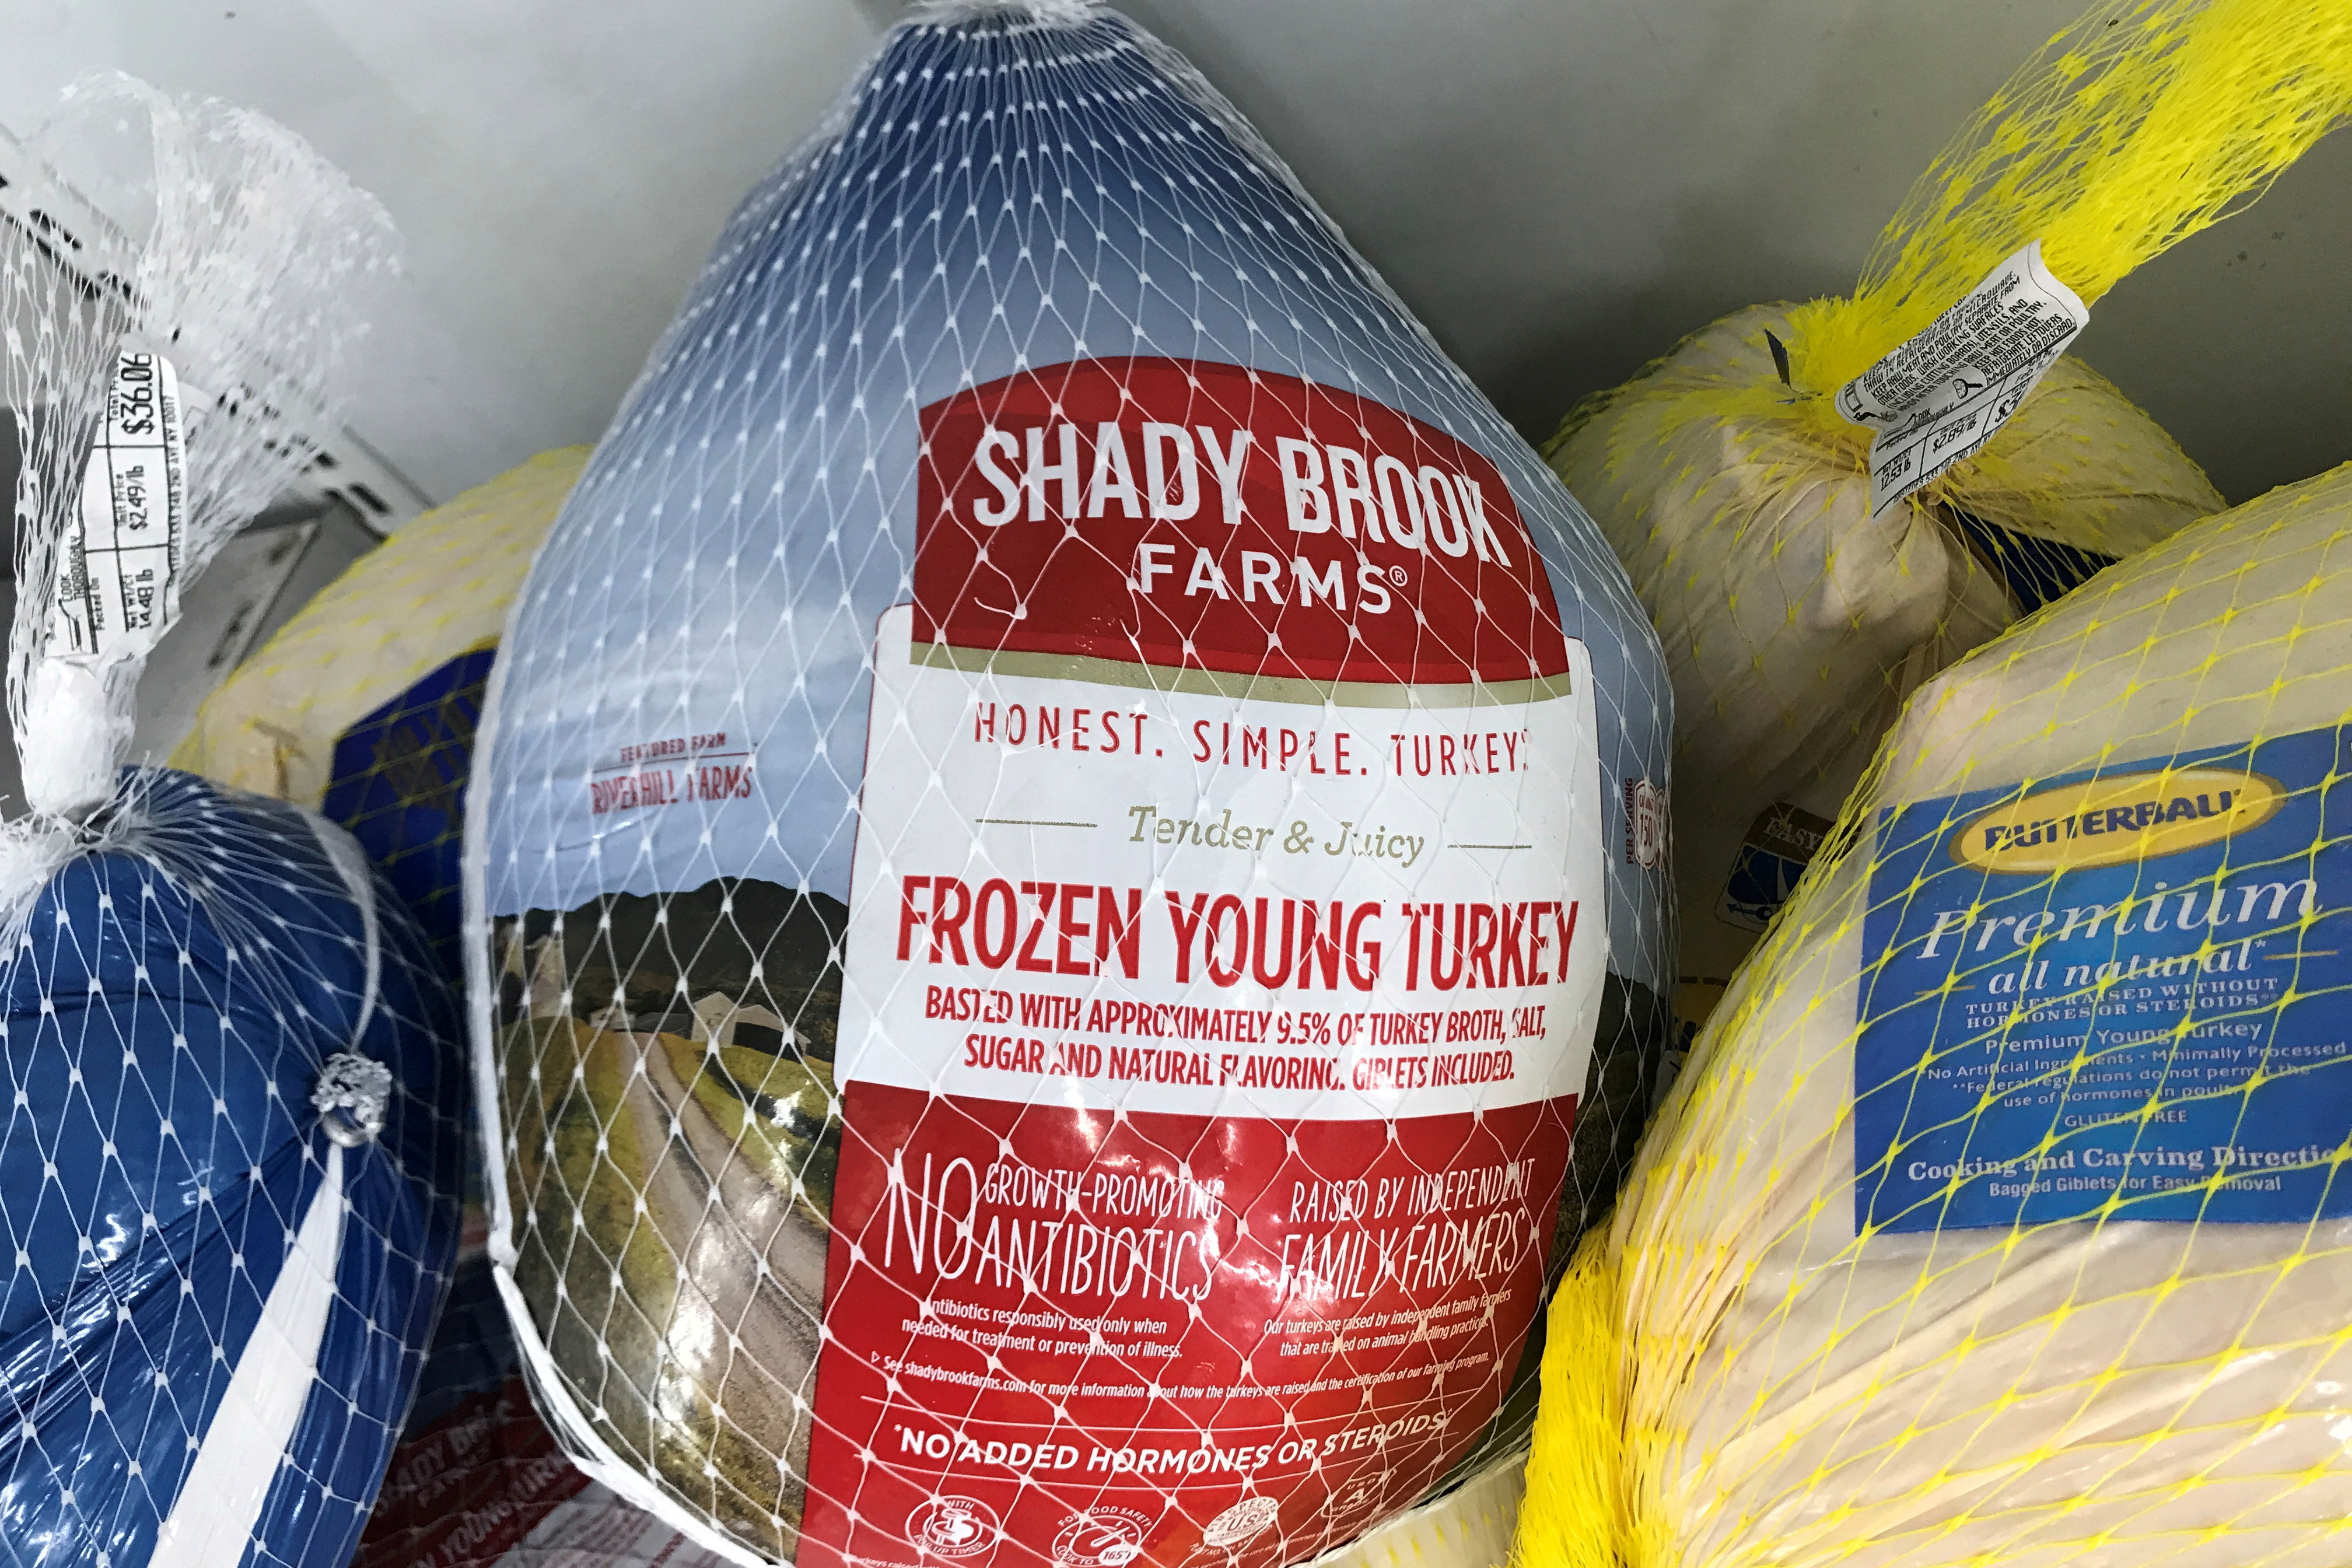 Frozen turkeys are pictured in a freezer case